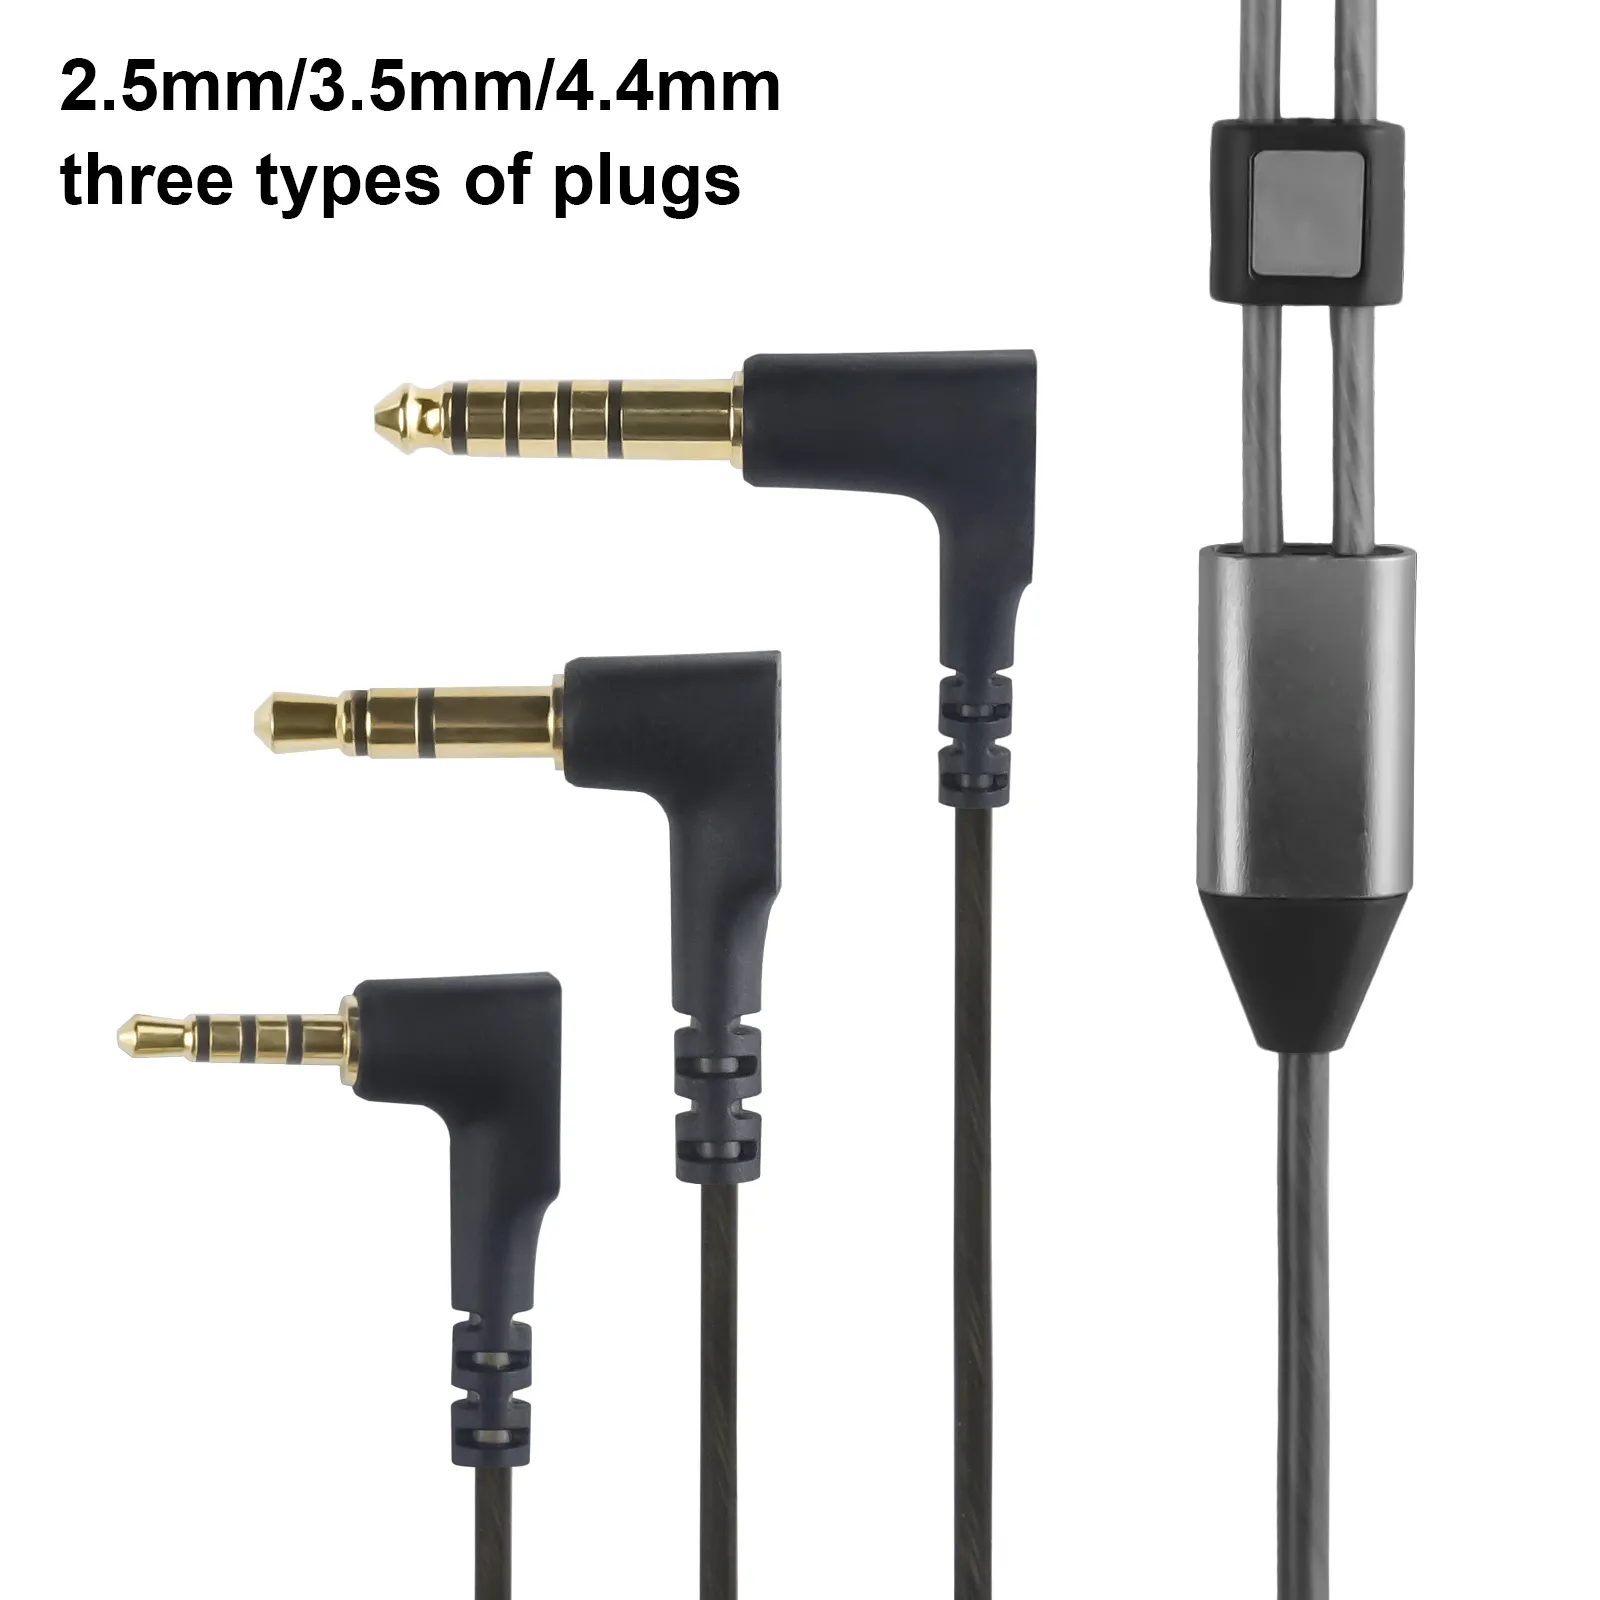 Cable de repuesto para auriculares, Cable para auriculares Sennheiser